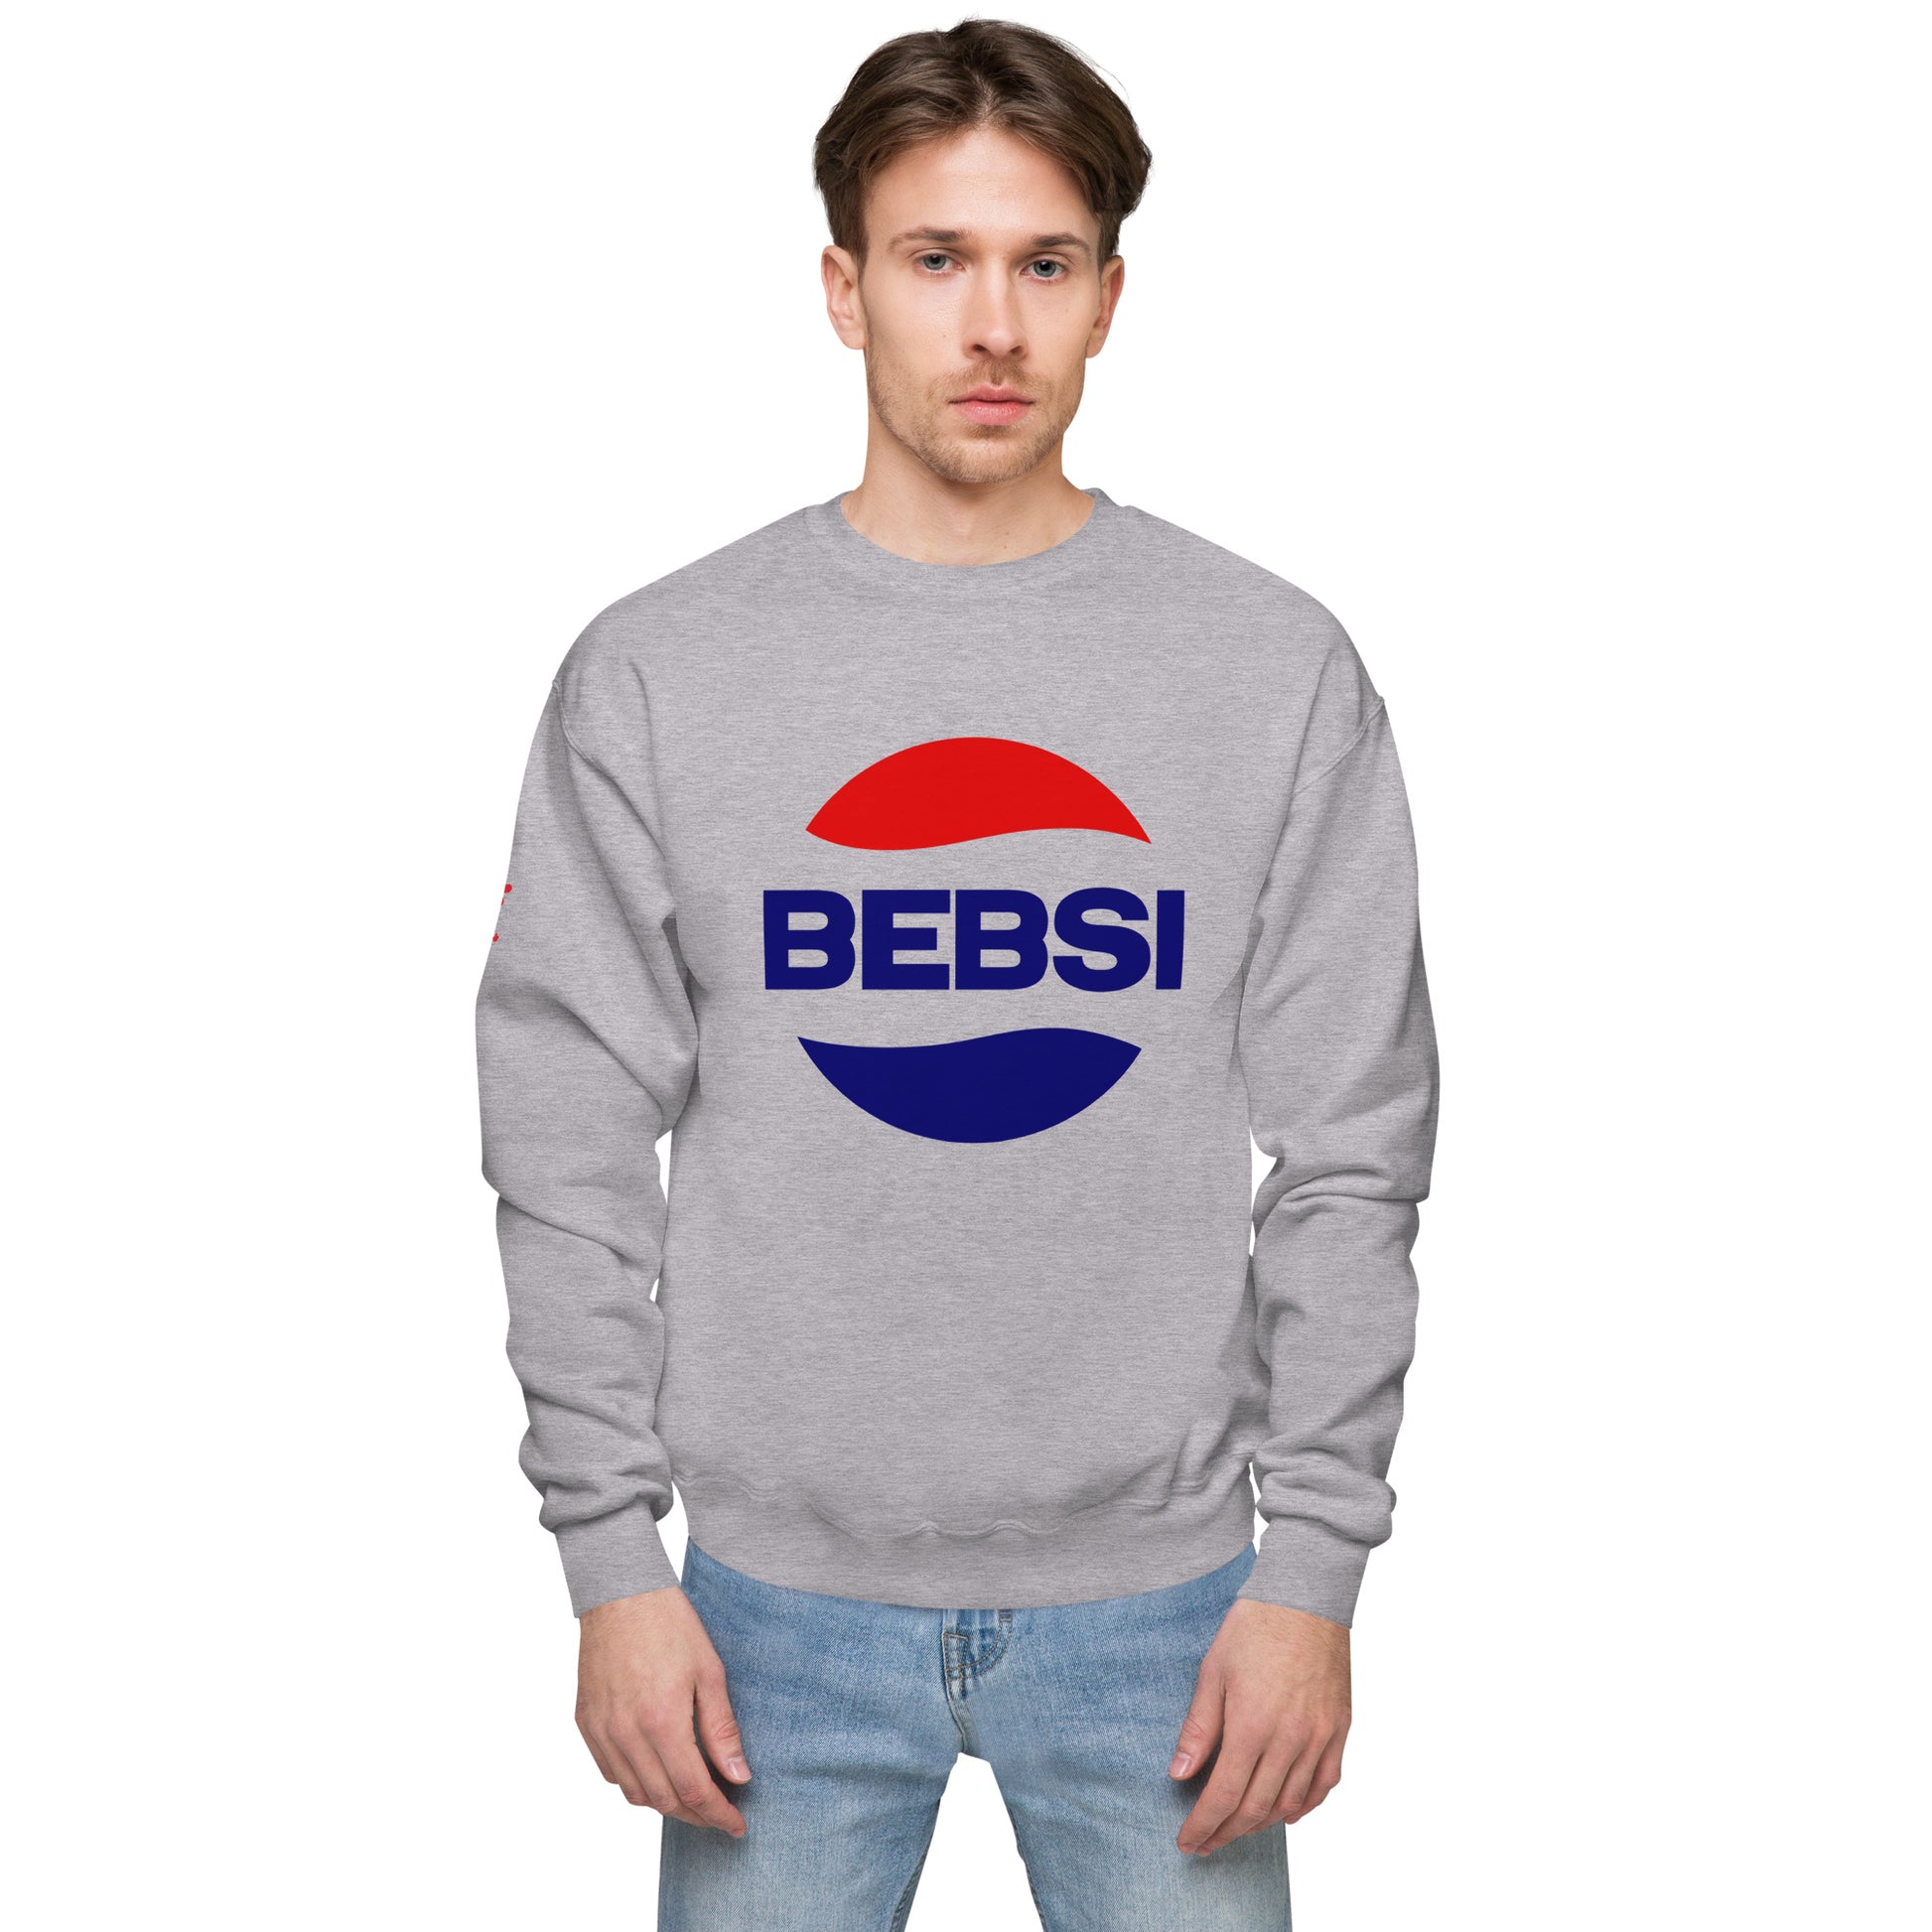 Bebsi Vintage - Sweatshirt Light Steel / XL